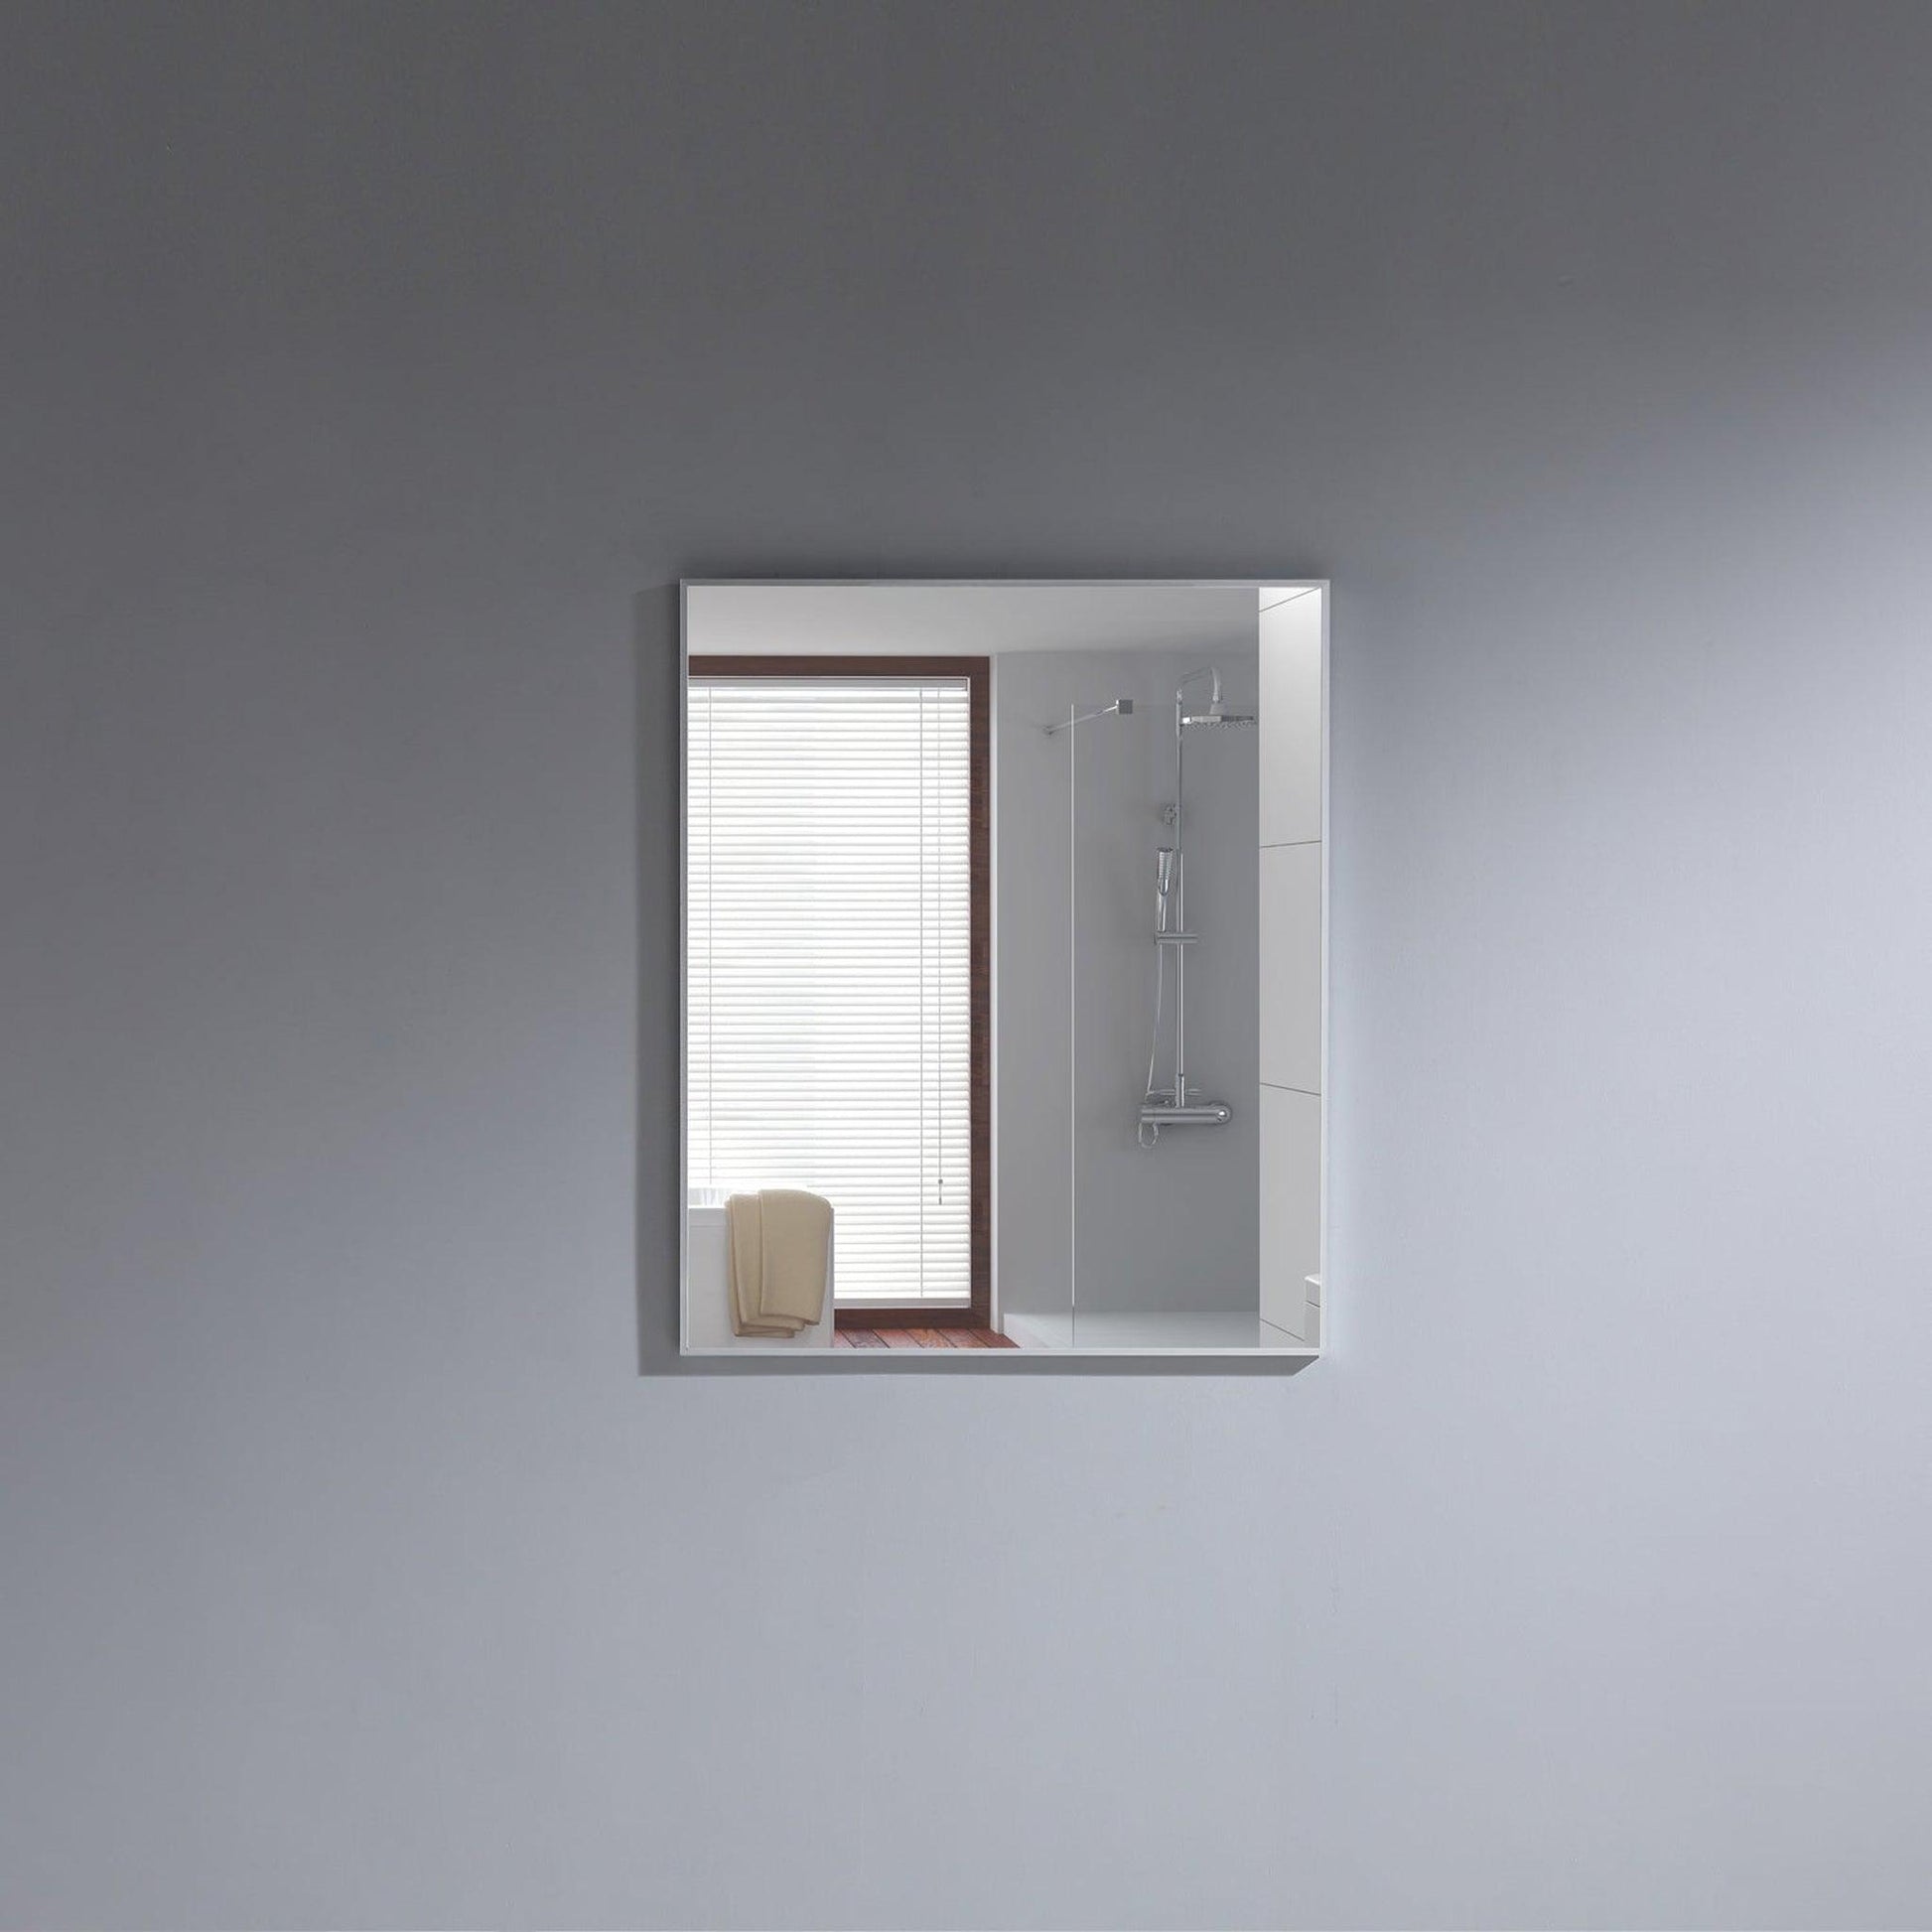 Eviva Sax 24" x 30" Polished Chrome Framed Bathroom Wall-Mounted Mirror